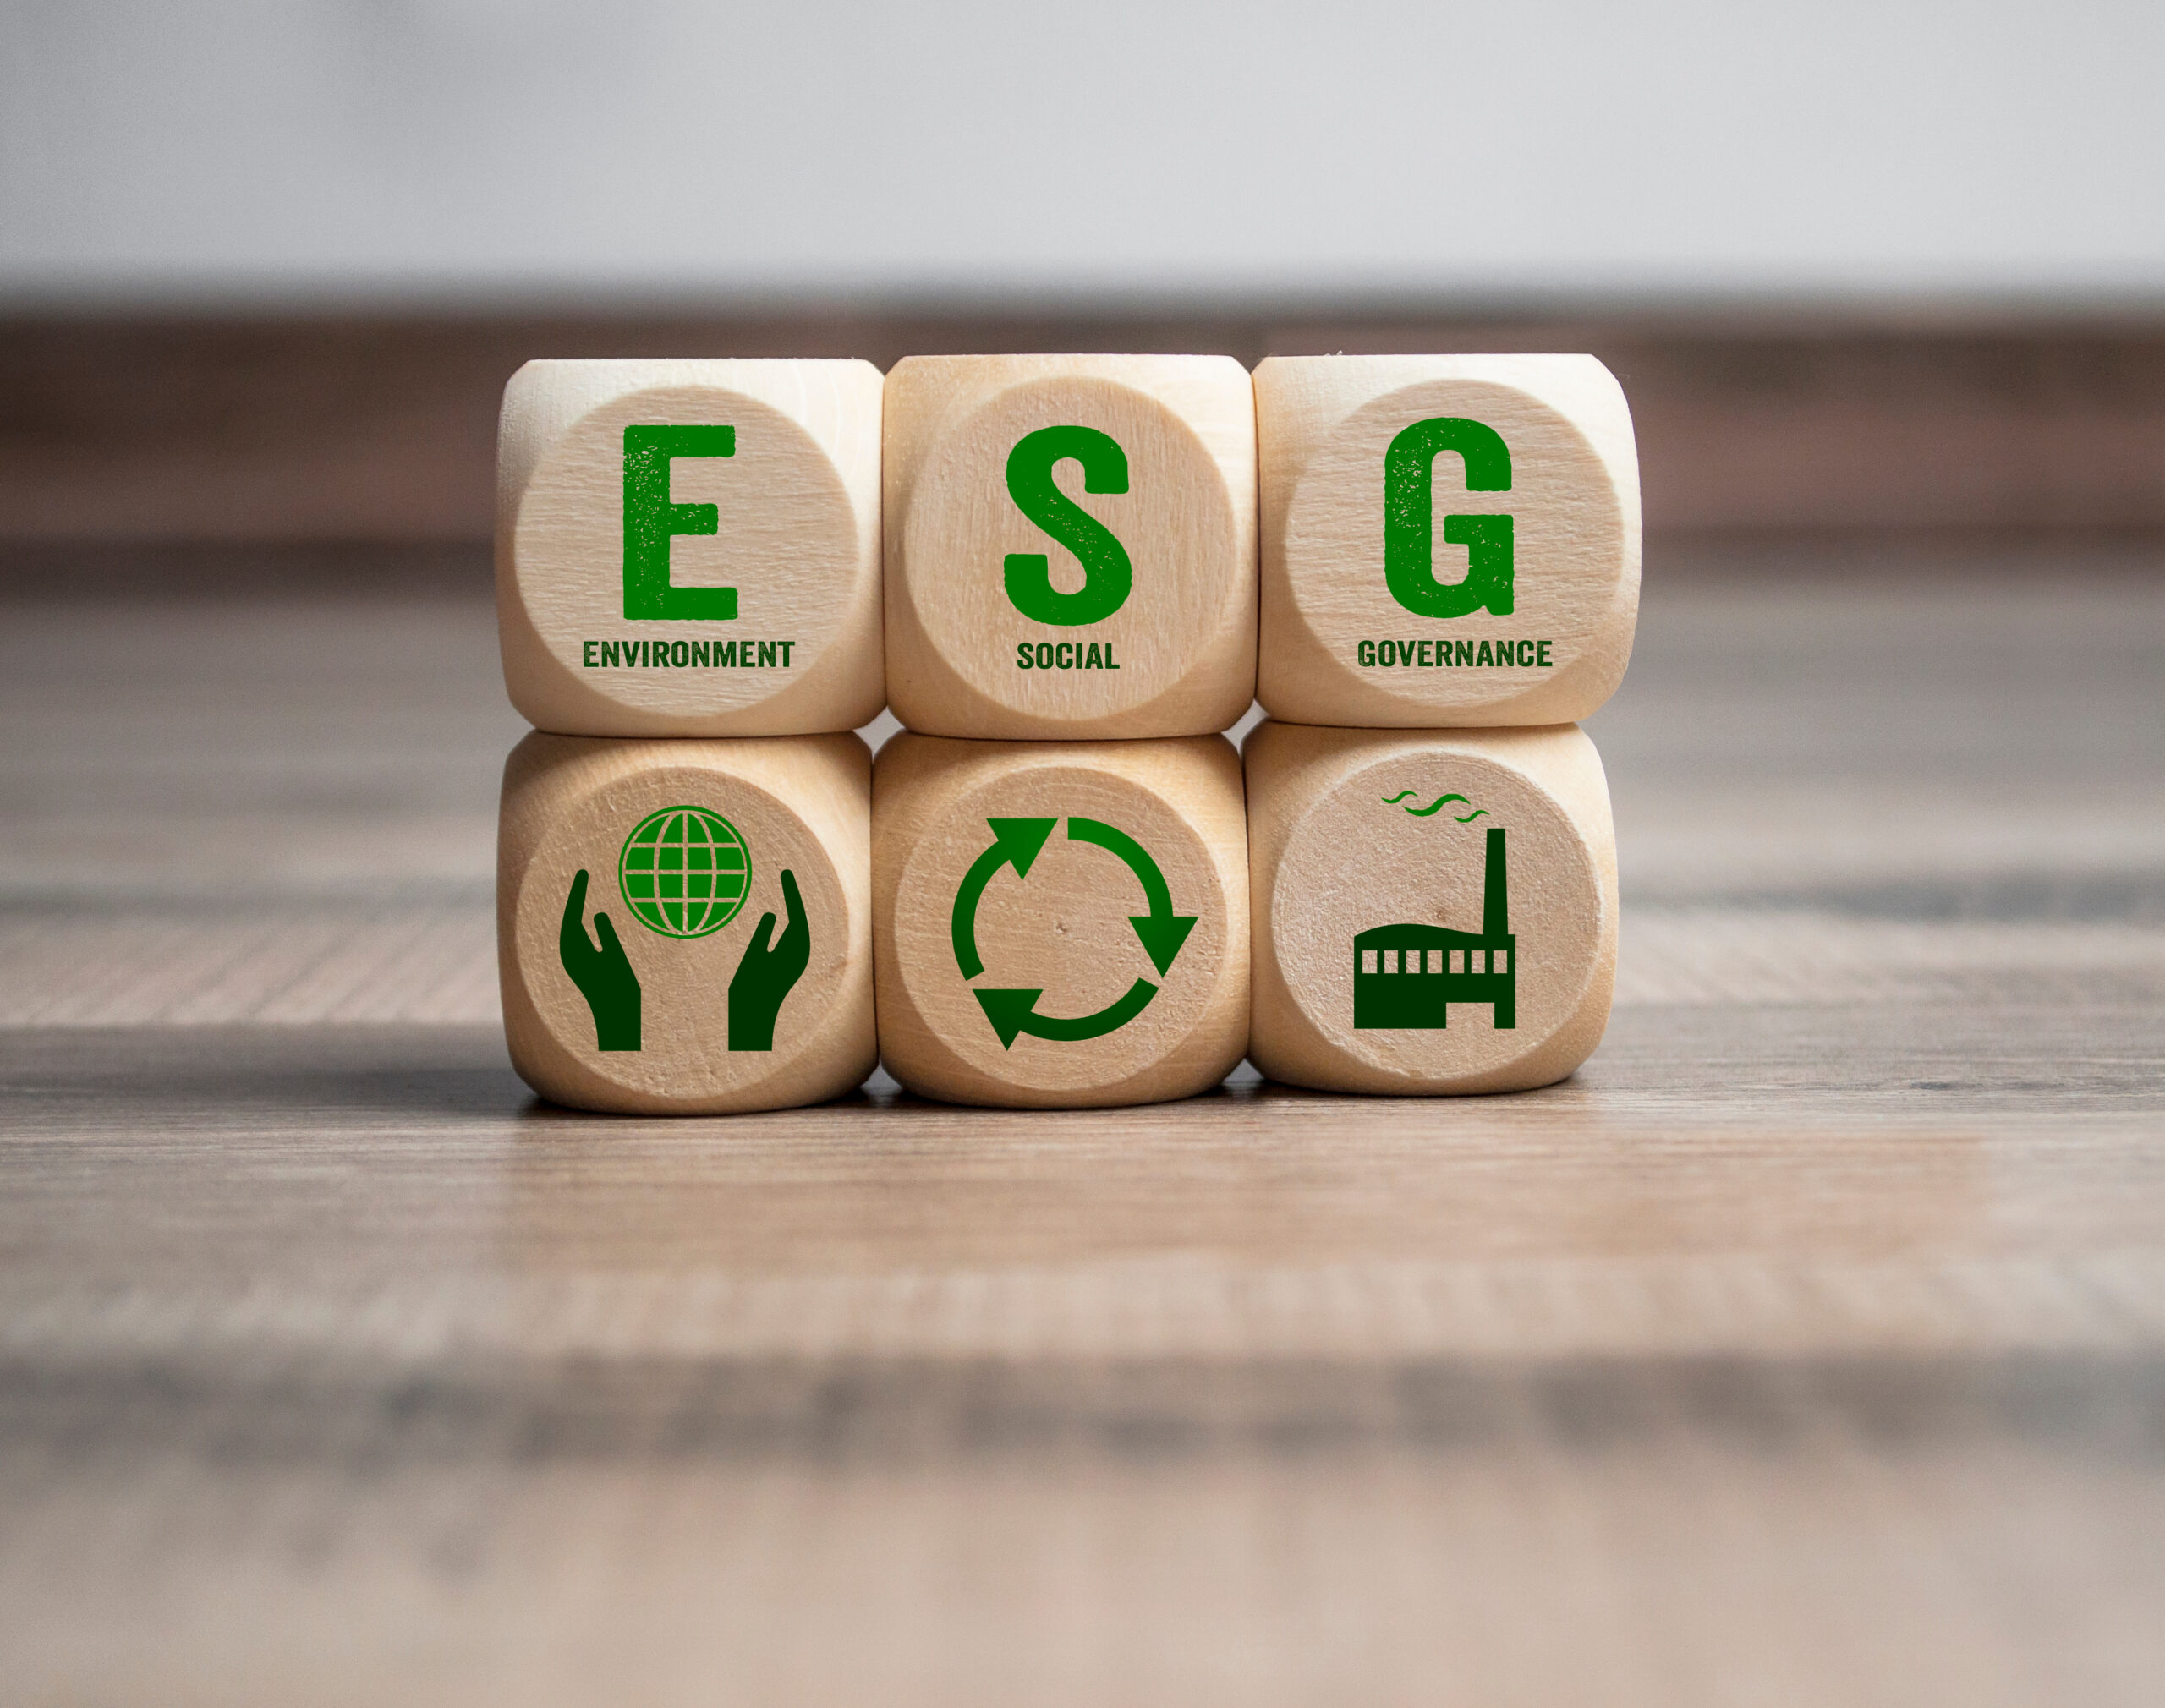 ESG, Environment, Social, Governance